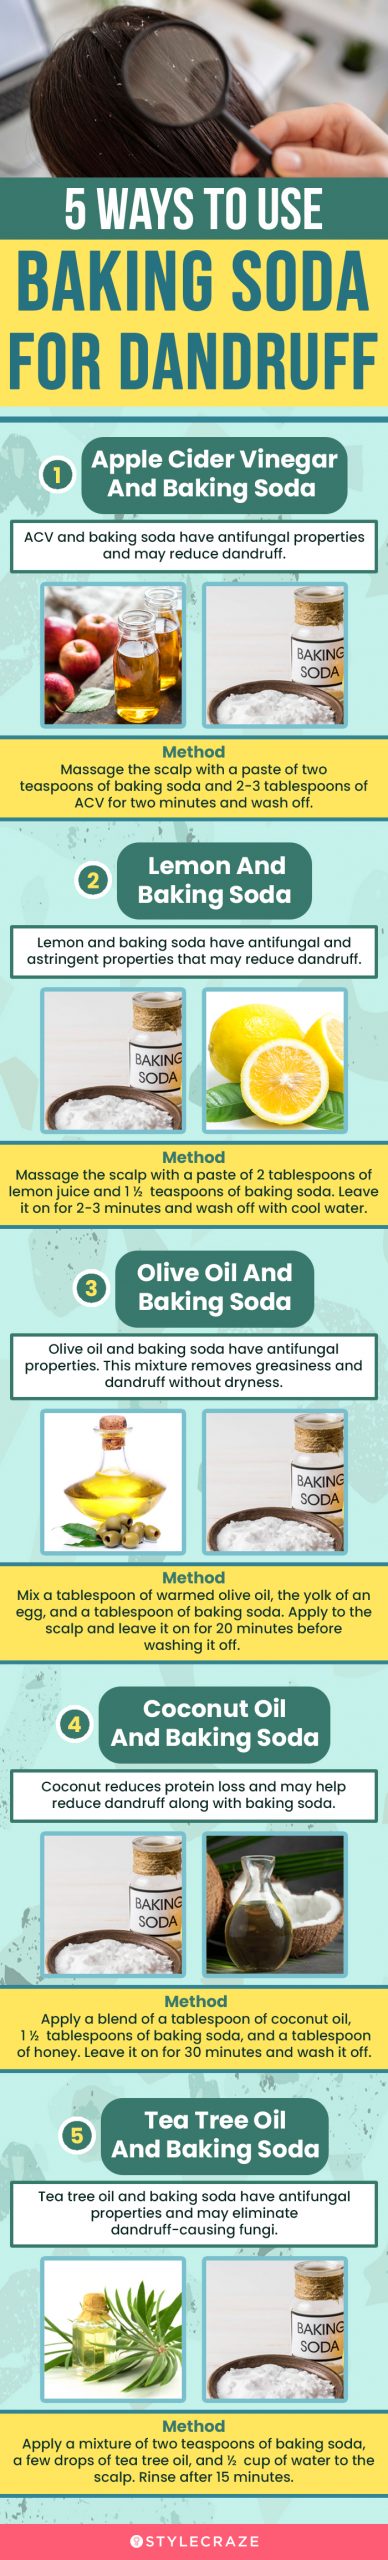 5 ways to use baking soda for dandruff (infographic)